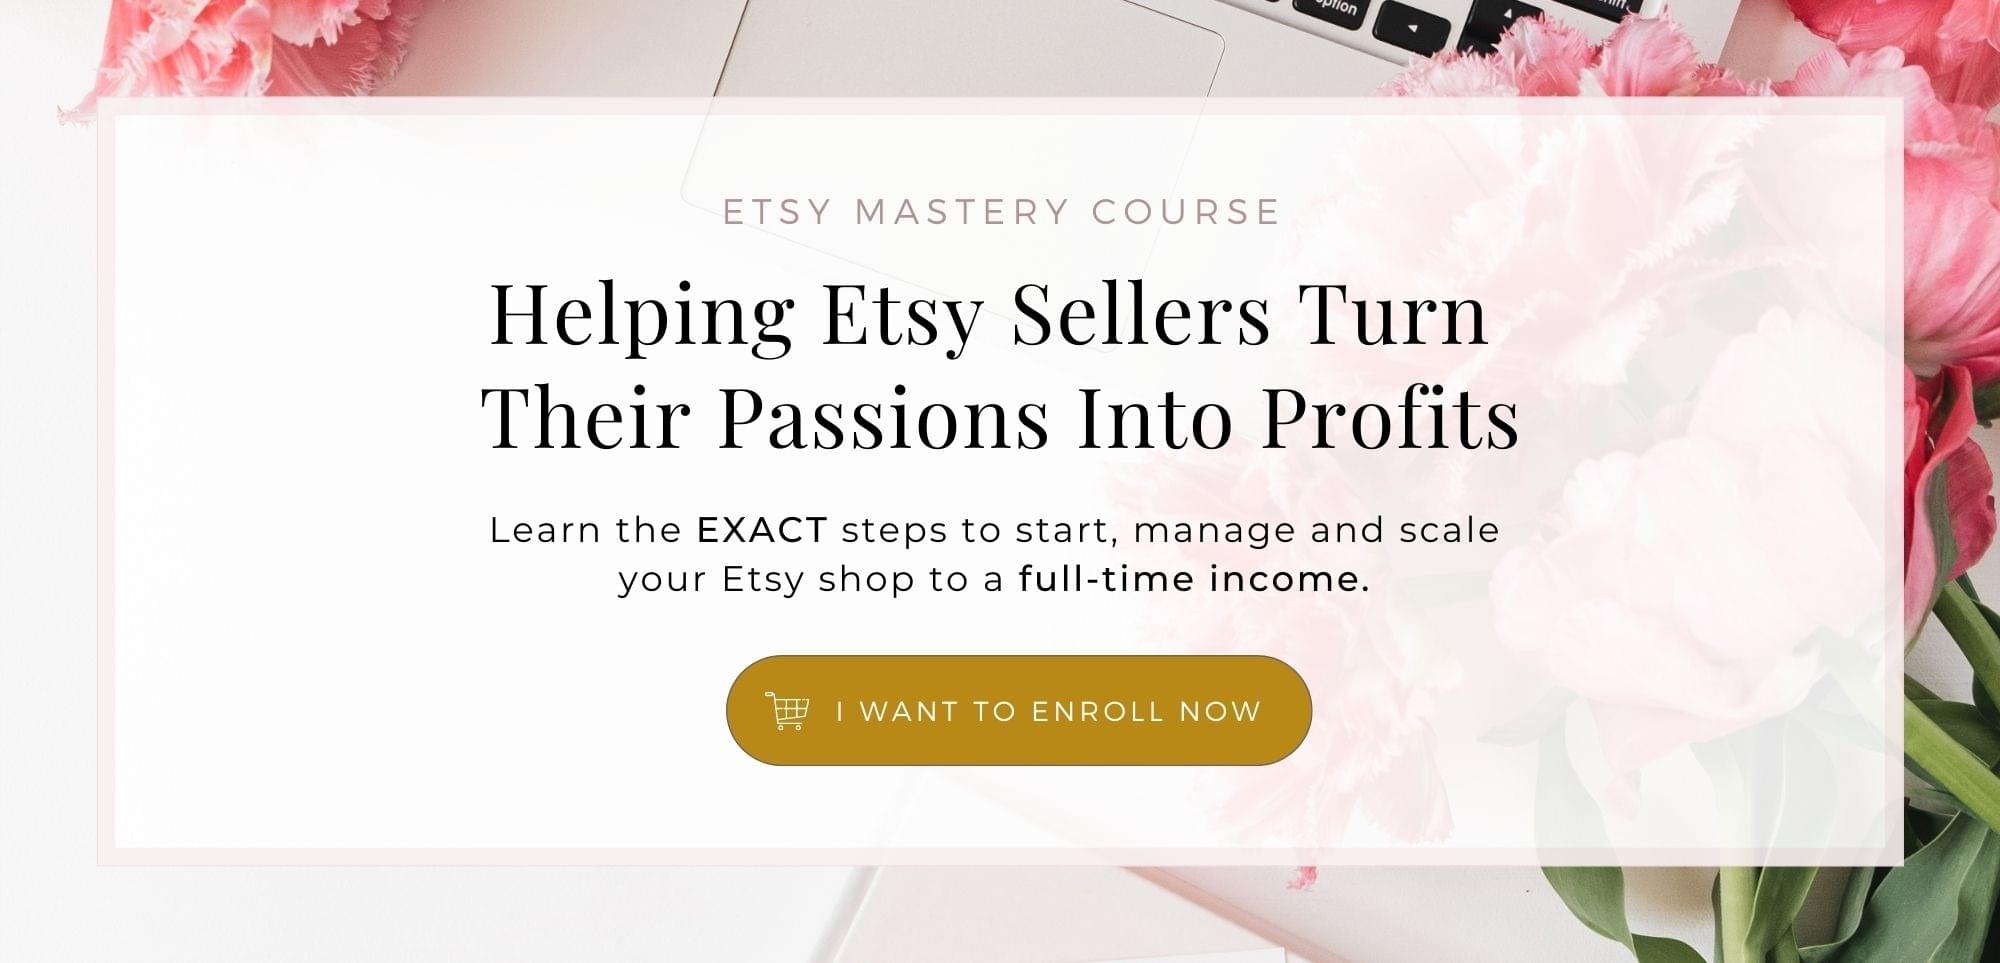 Etsy Mastery Course